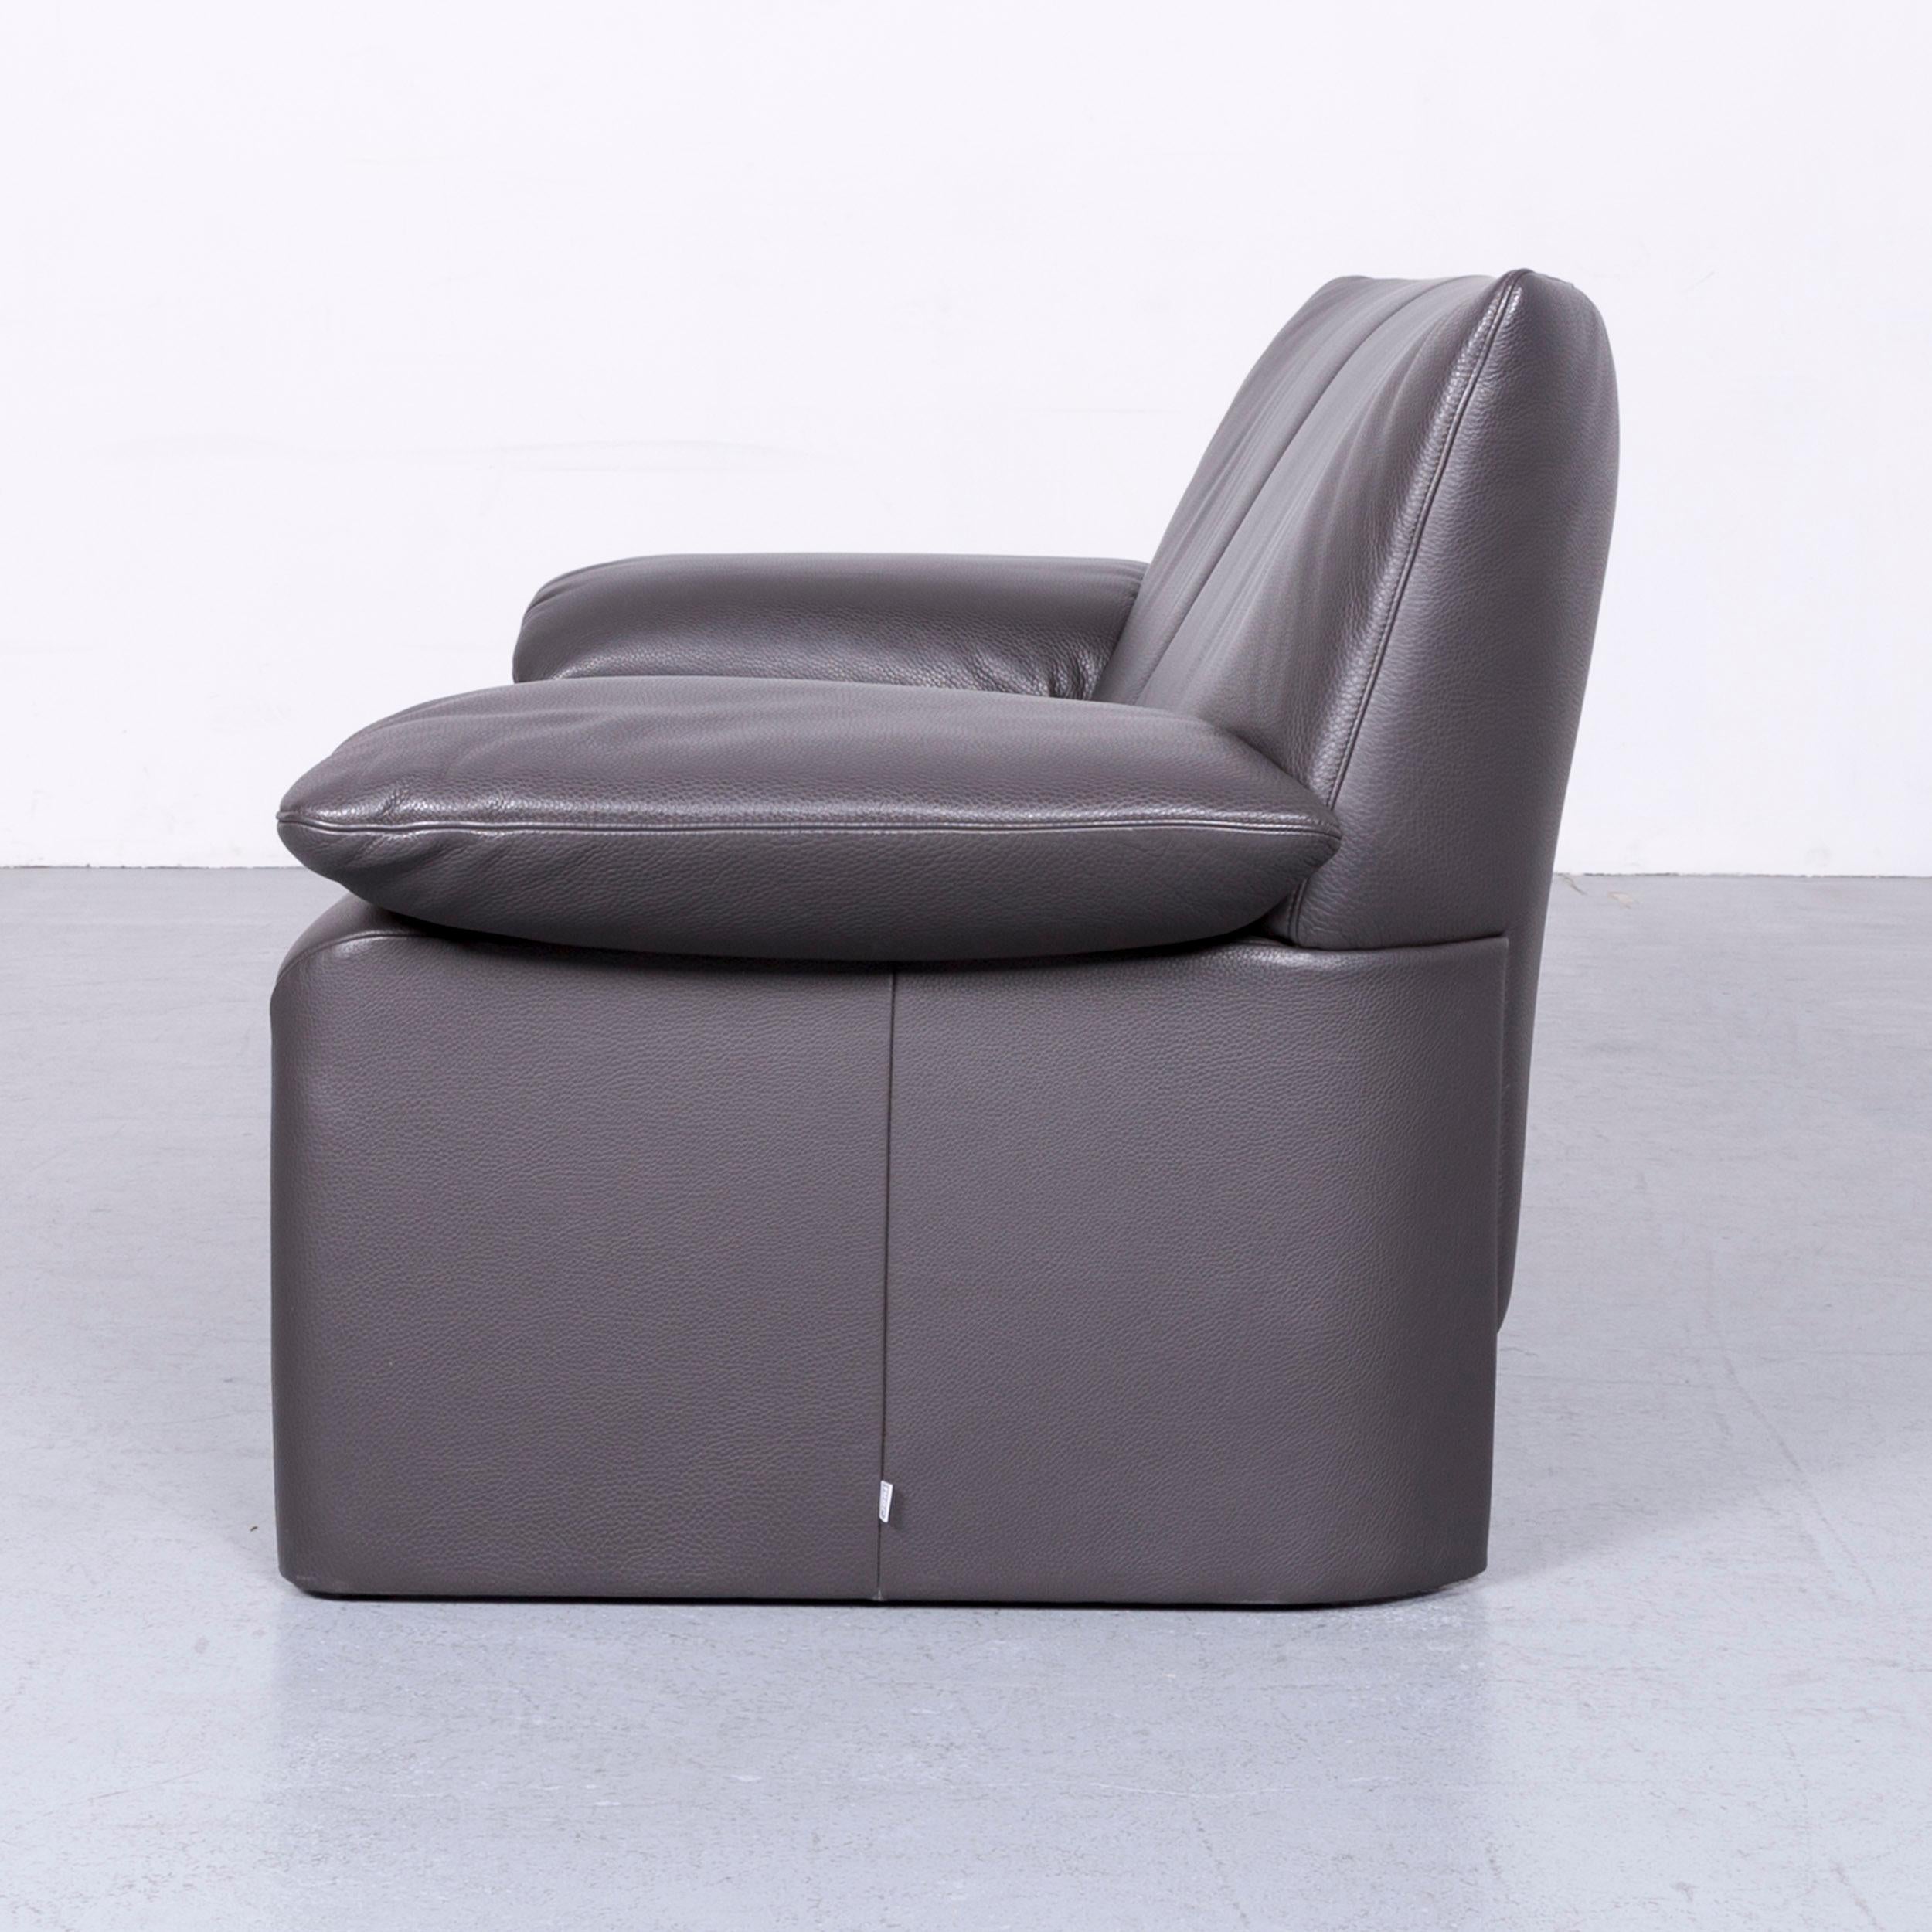 Jori Linea Designer Leather Sofa Grey Two-Seat Couch 4